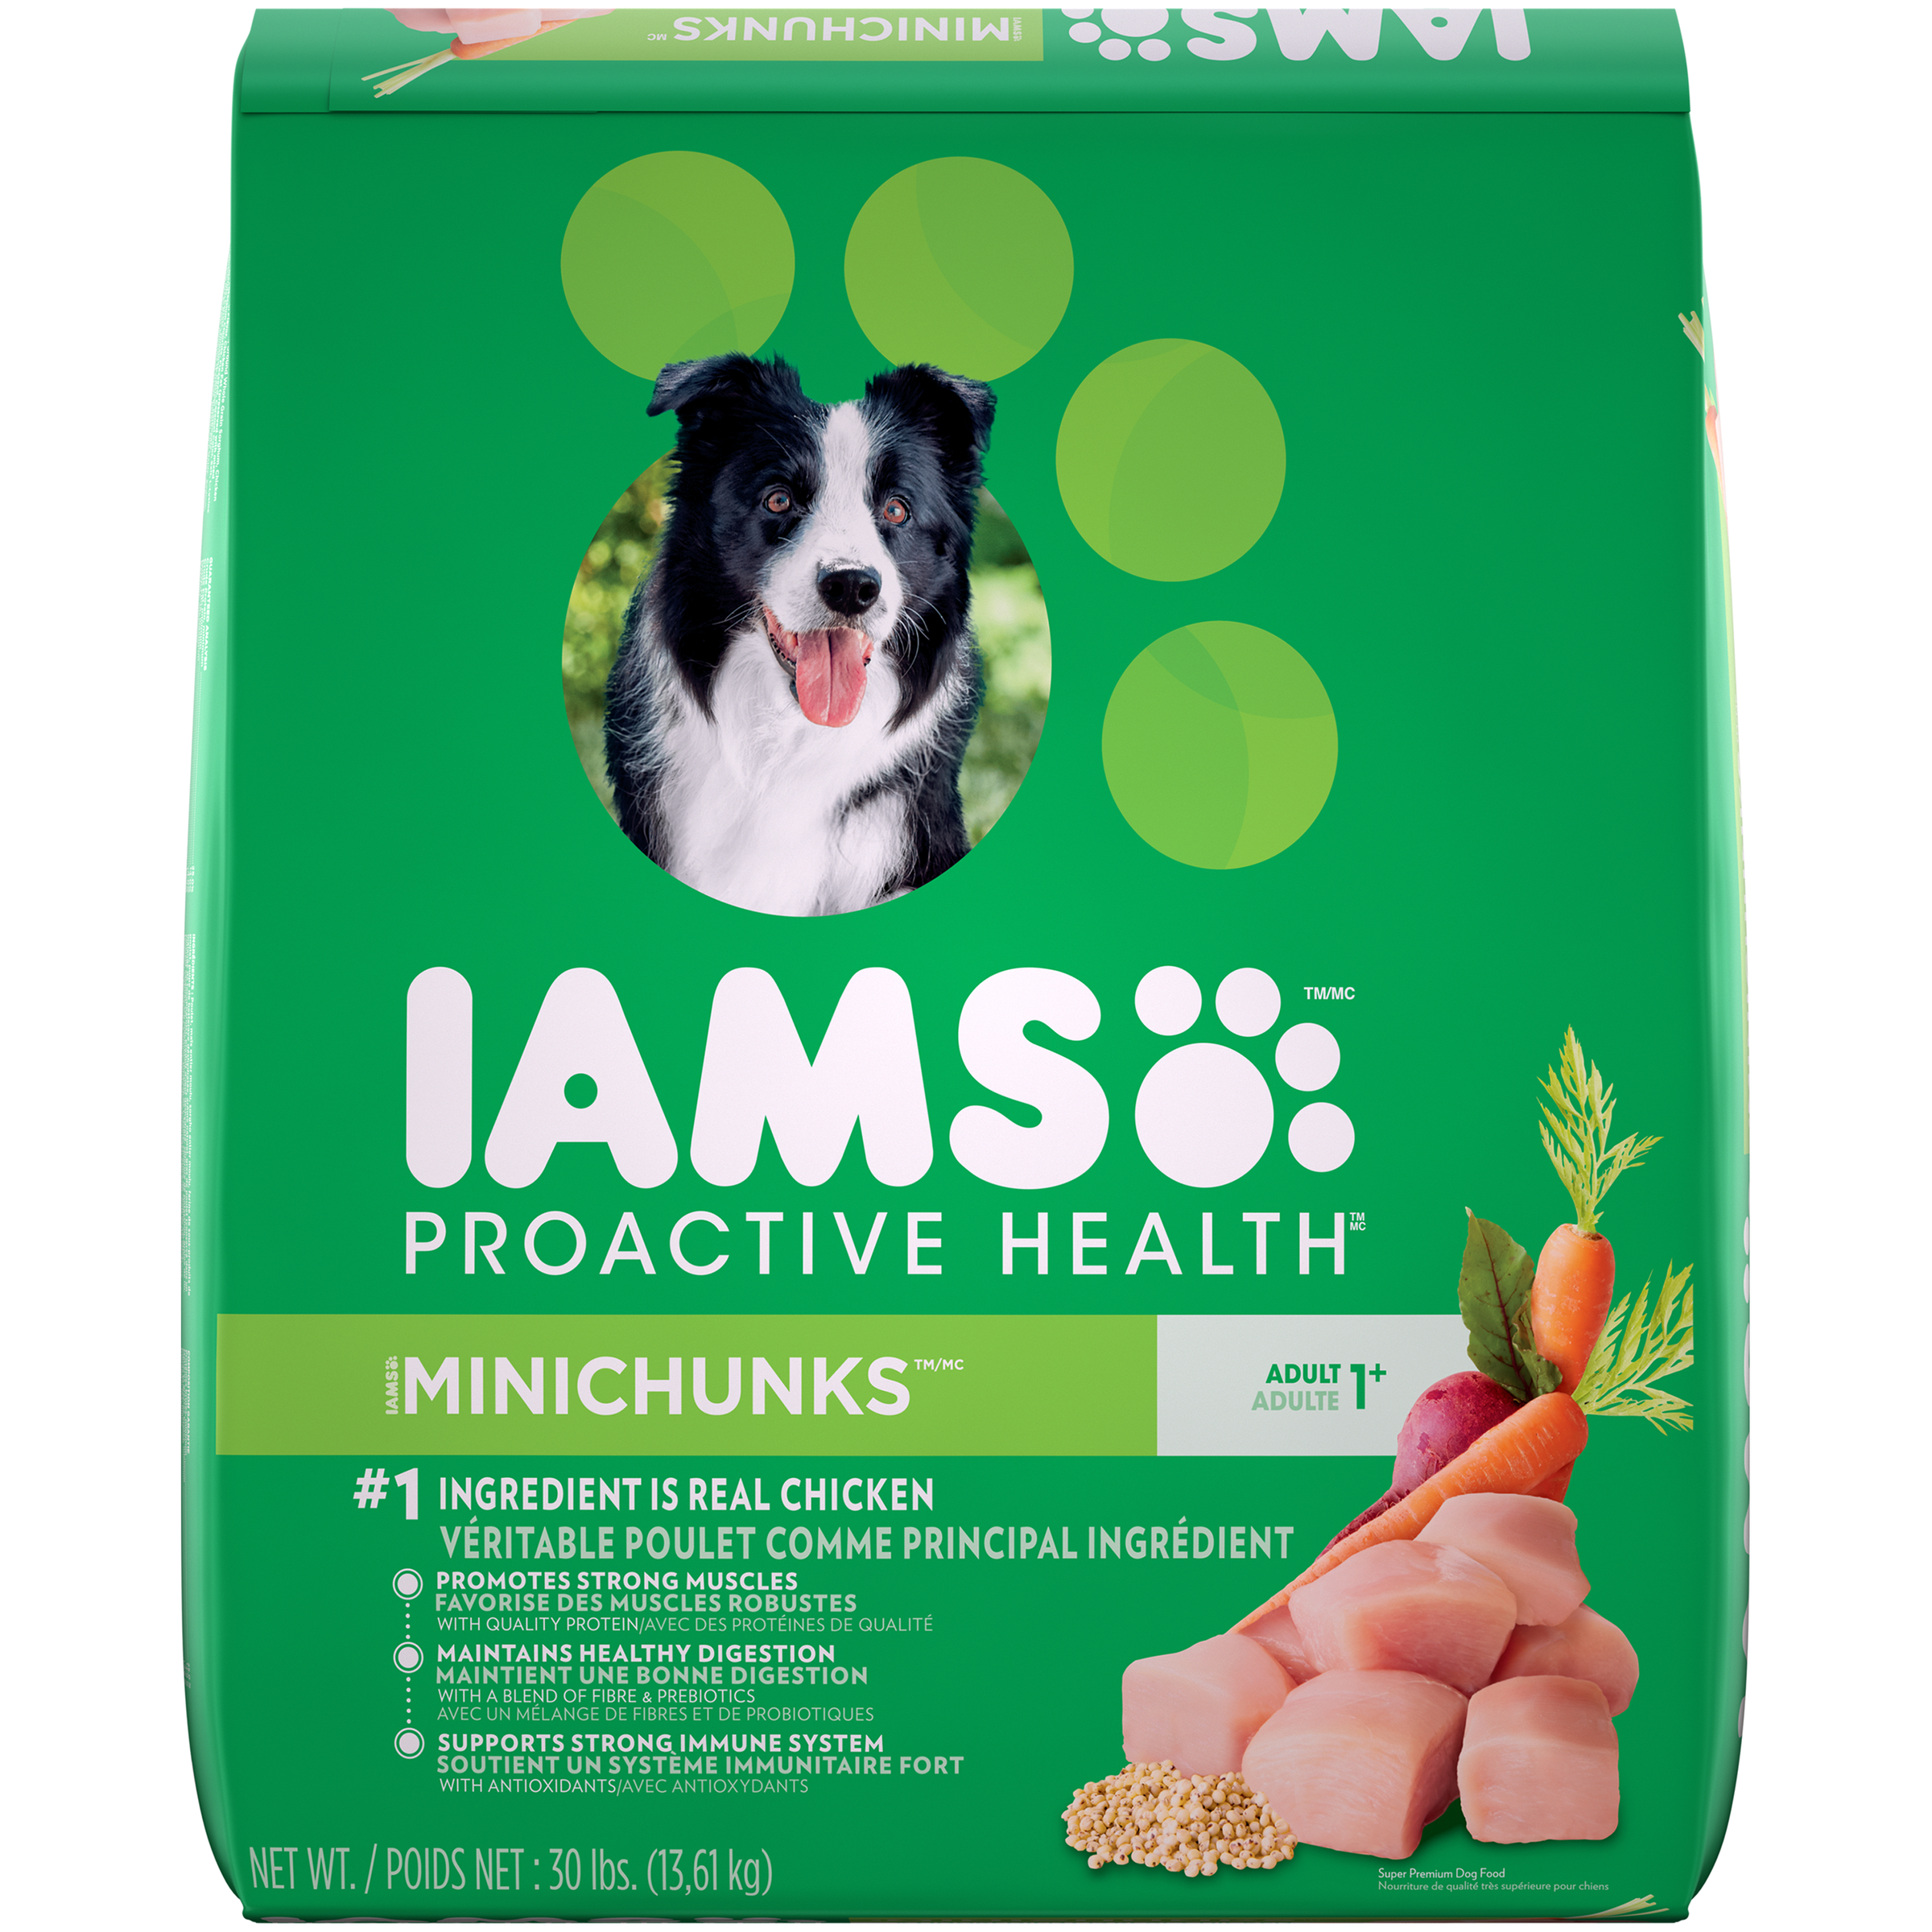 Iams MiniChunks Dog Food, Proactive Health, 16 Years, 30 lb